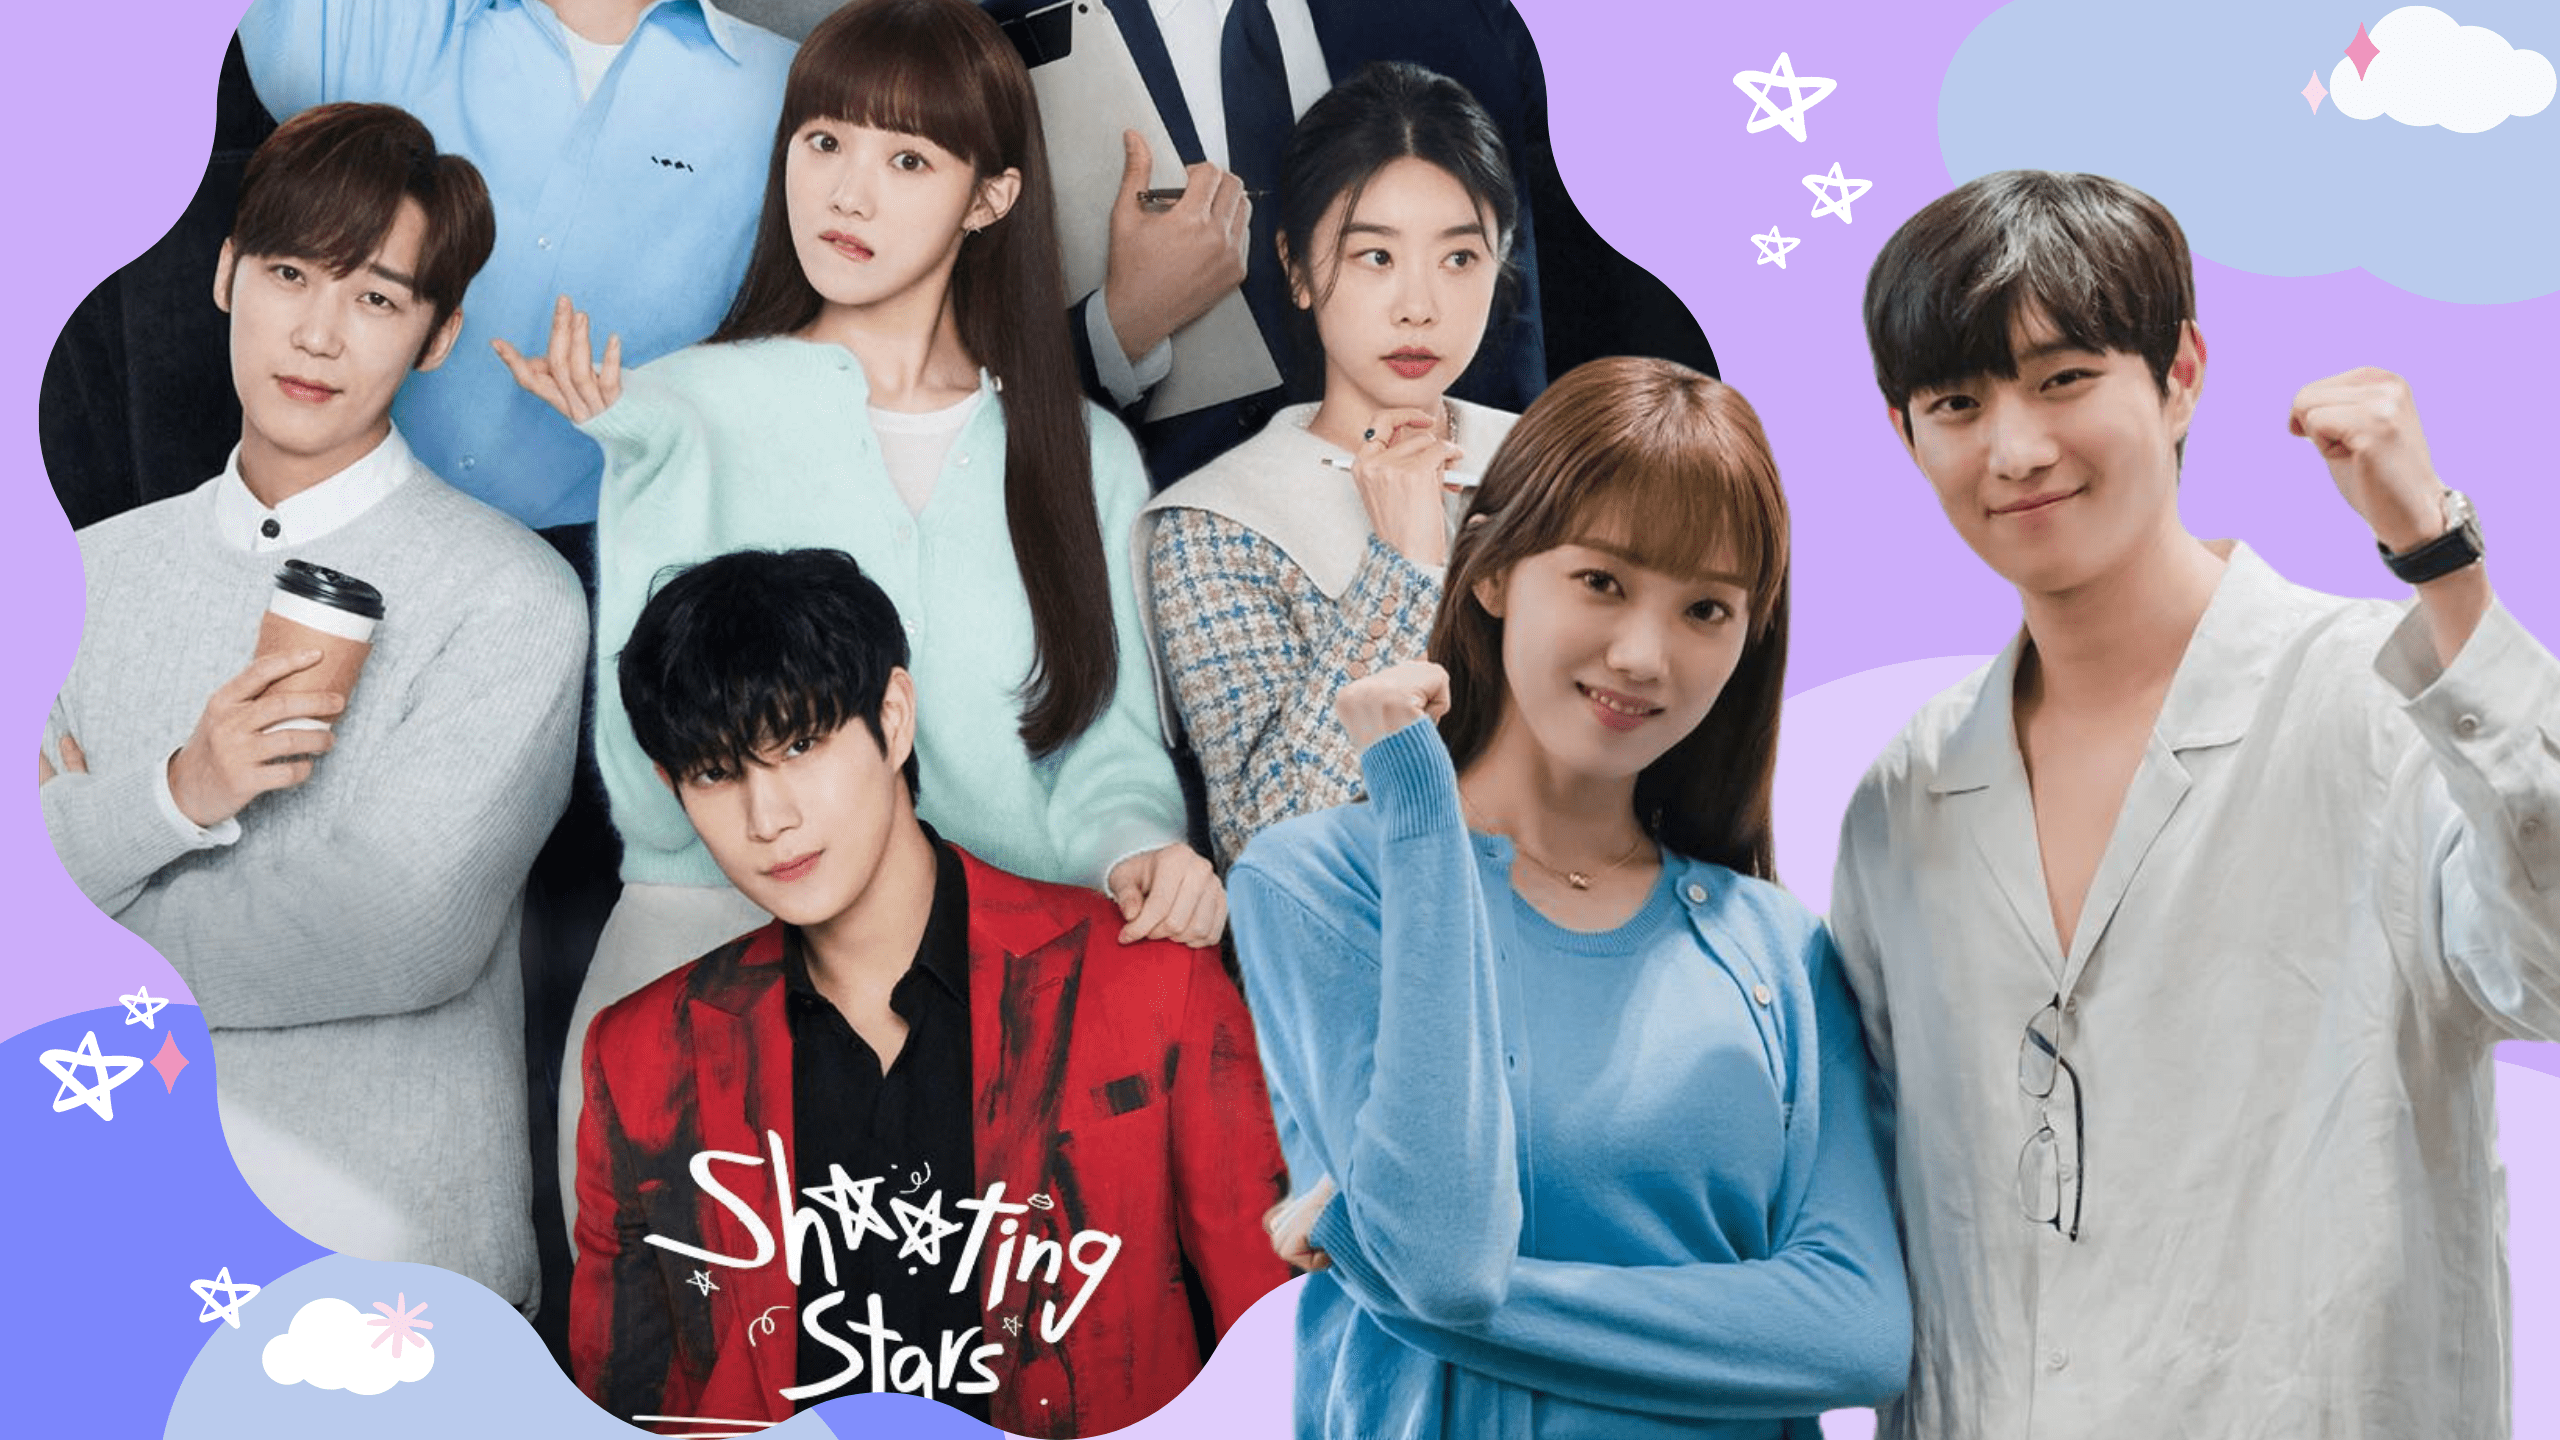 Lee Sung Kyung y Kim Young Dae protagonizarán el drama Sh**ting Stars